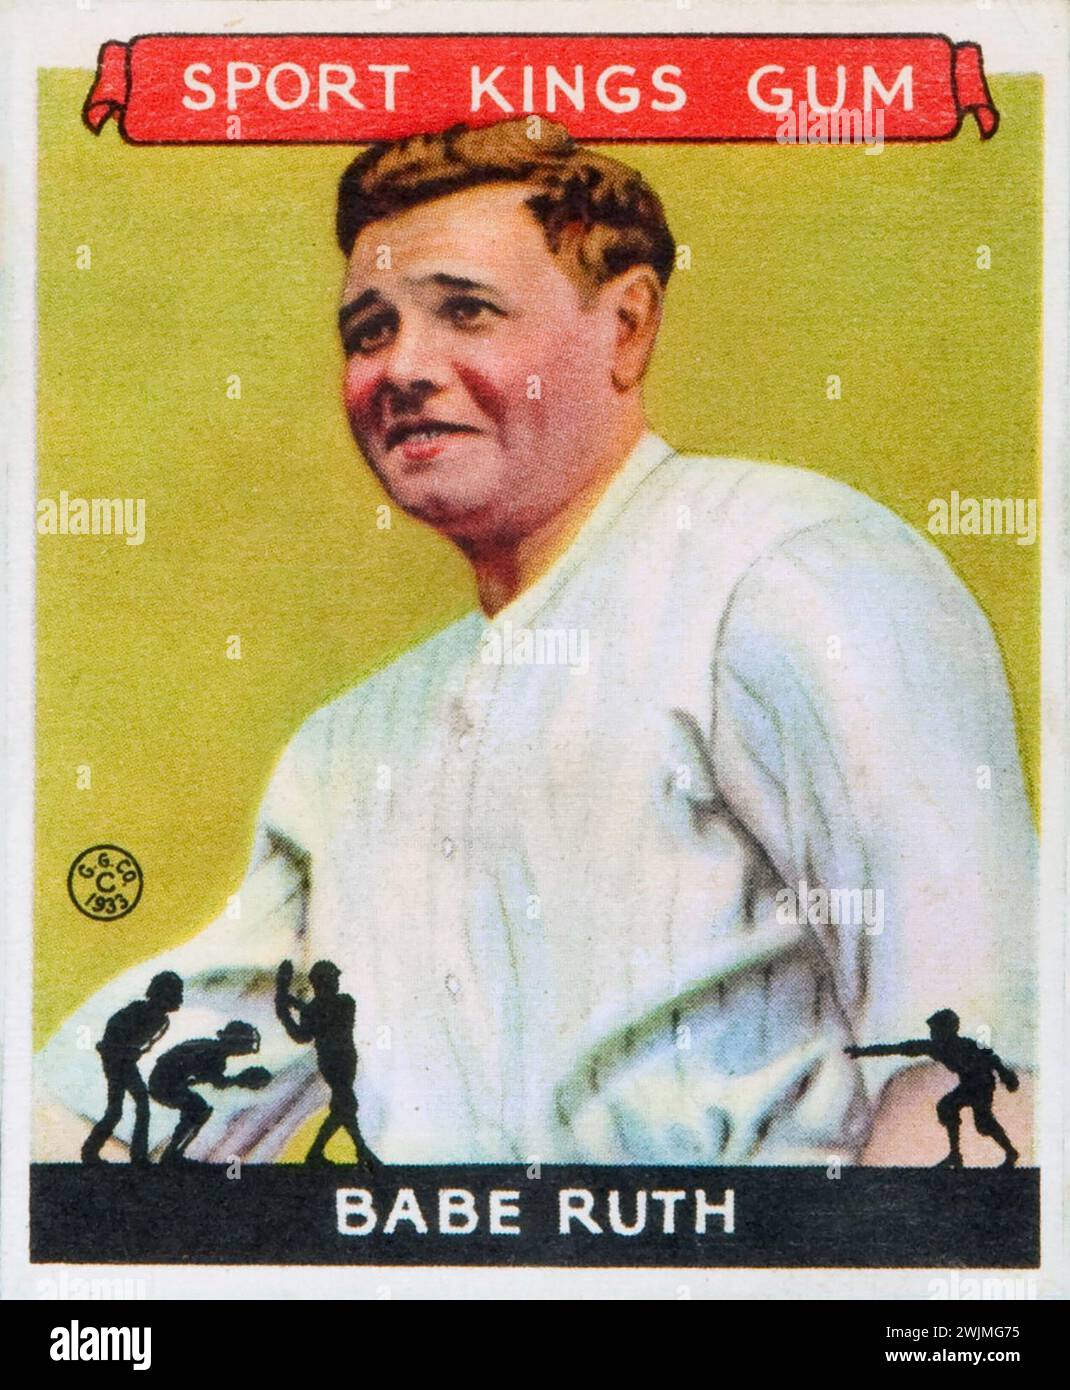 Goudey Sport Kings Gum, bubble gum, Baseball Card feat. Babe Ruth, 1933 Stock Photo